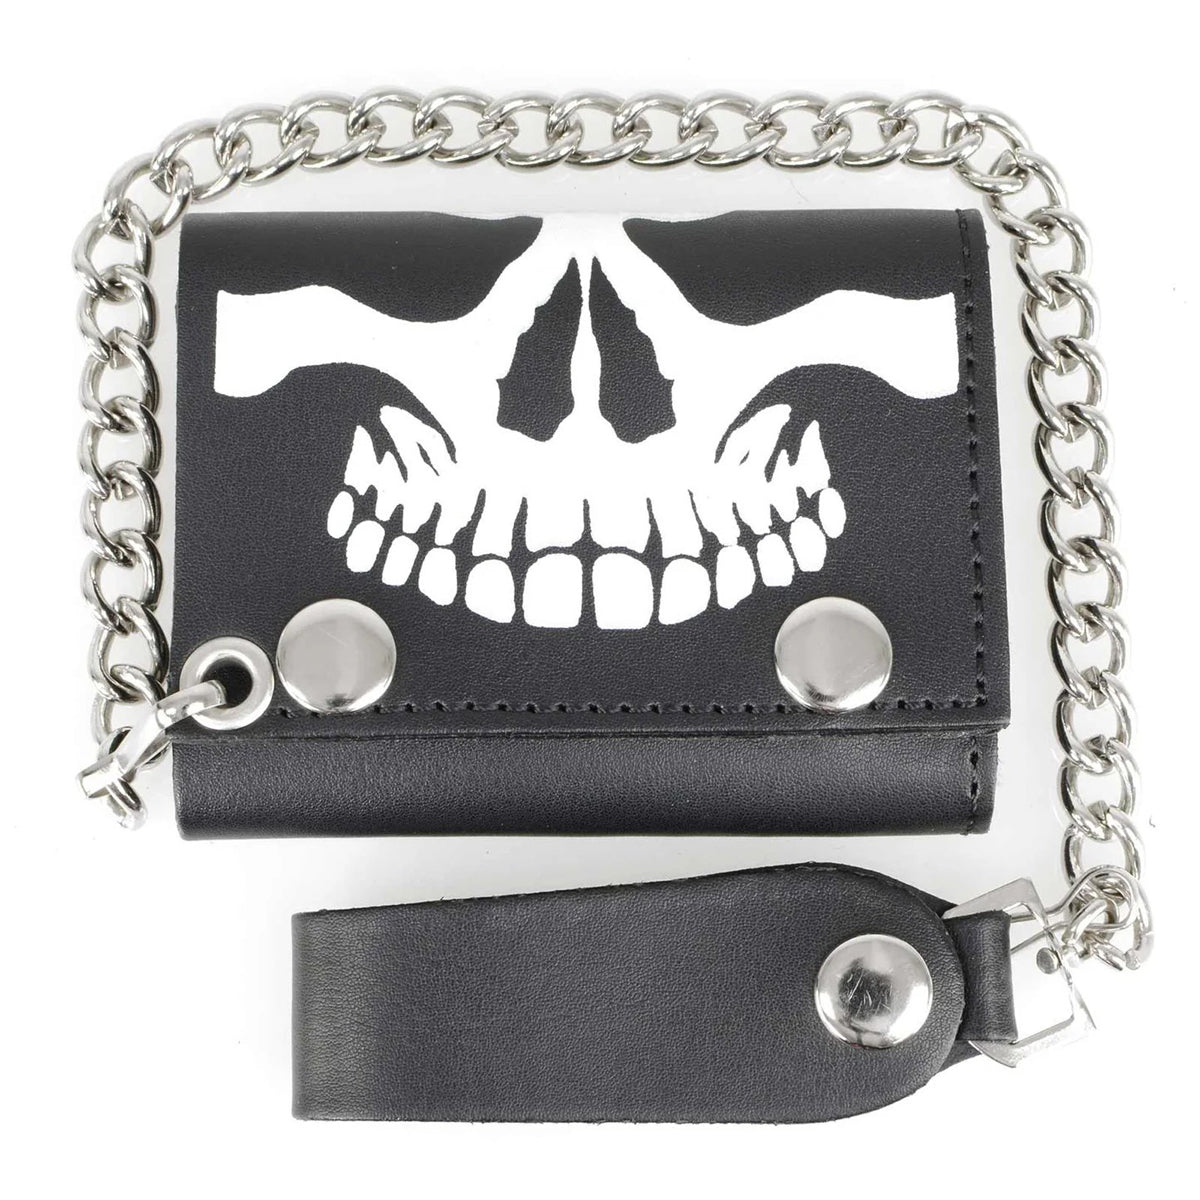 Men's 4” Leather “Skeleton Teeth” Tri-Fold Wallet w/ Anti-Theft Stainless Steel Chain